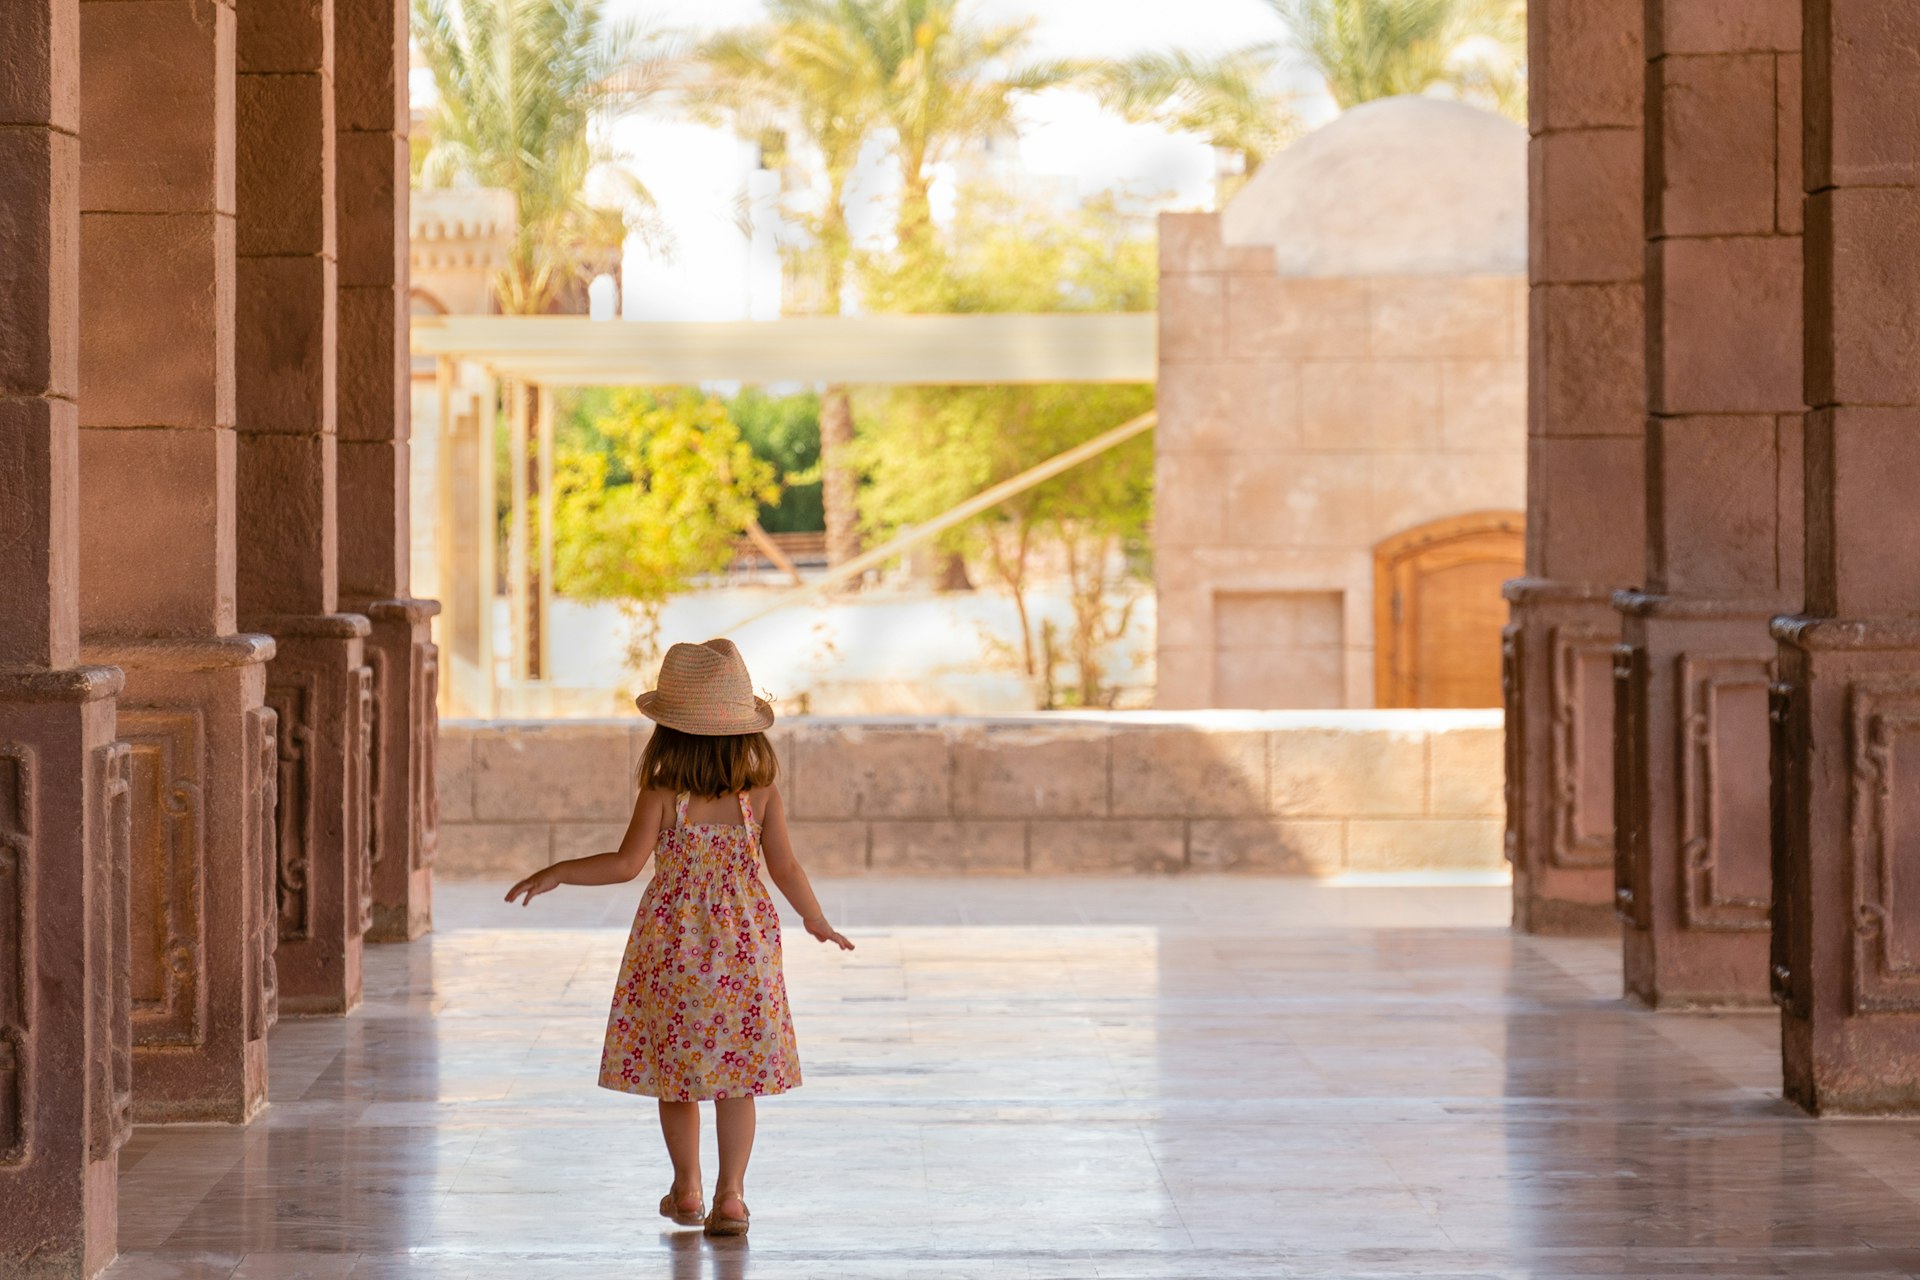 A little girl walks down a portico among the columns in Sharm El Sheikh, Egypt